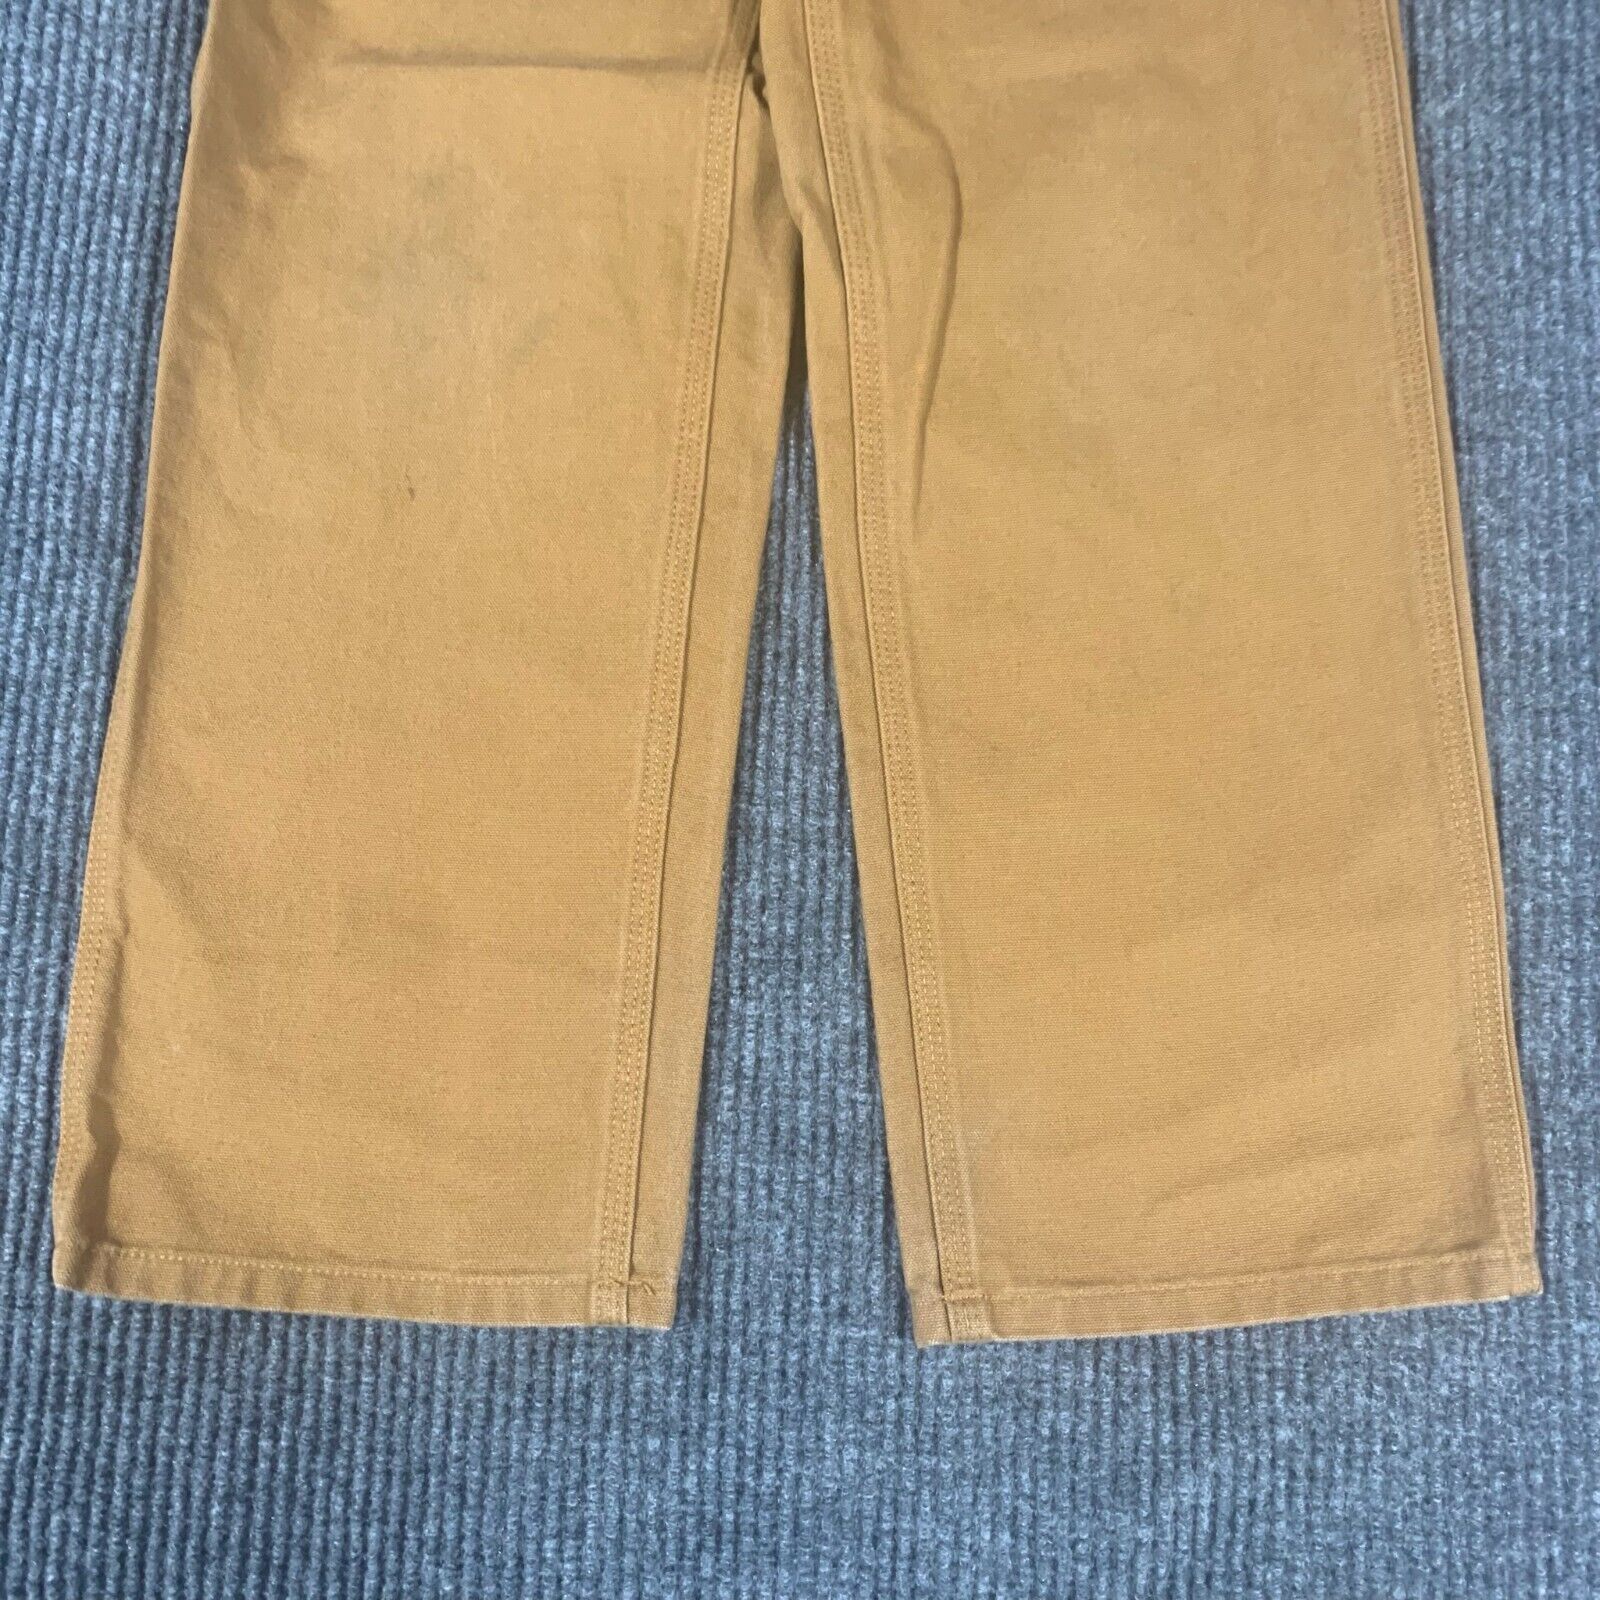 Carhartt Pants Youth Boys 12 26x27 Brown Carpenter Utility Cotton ...